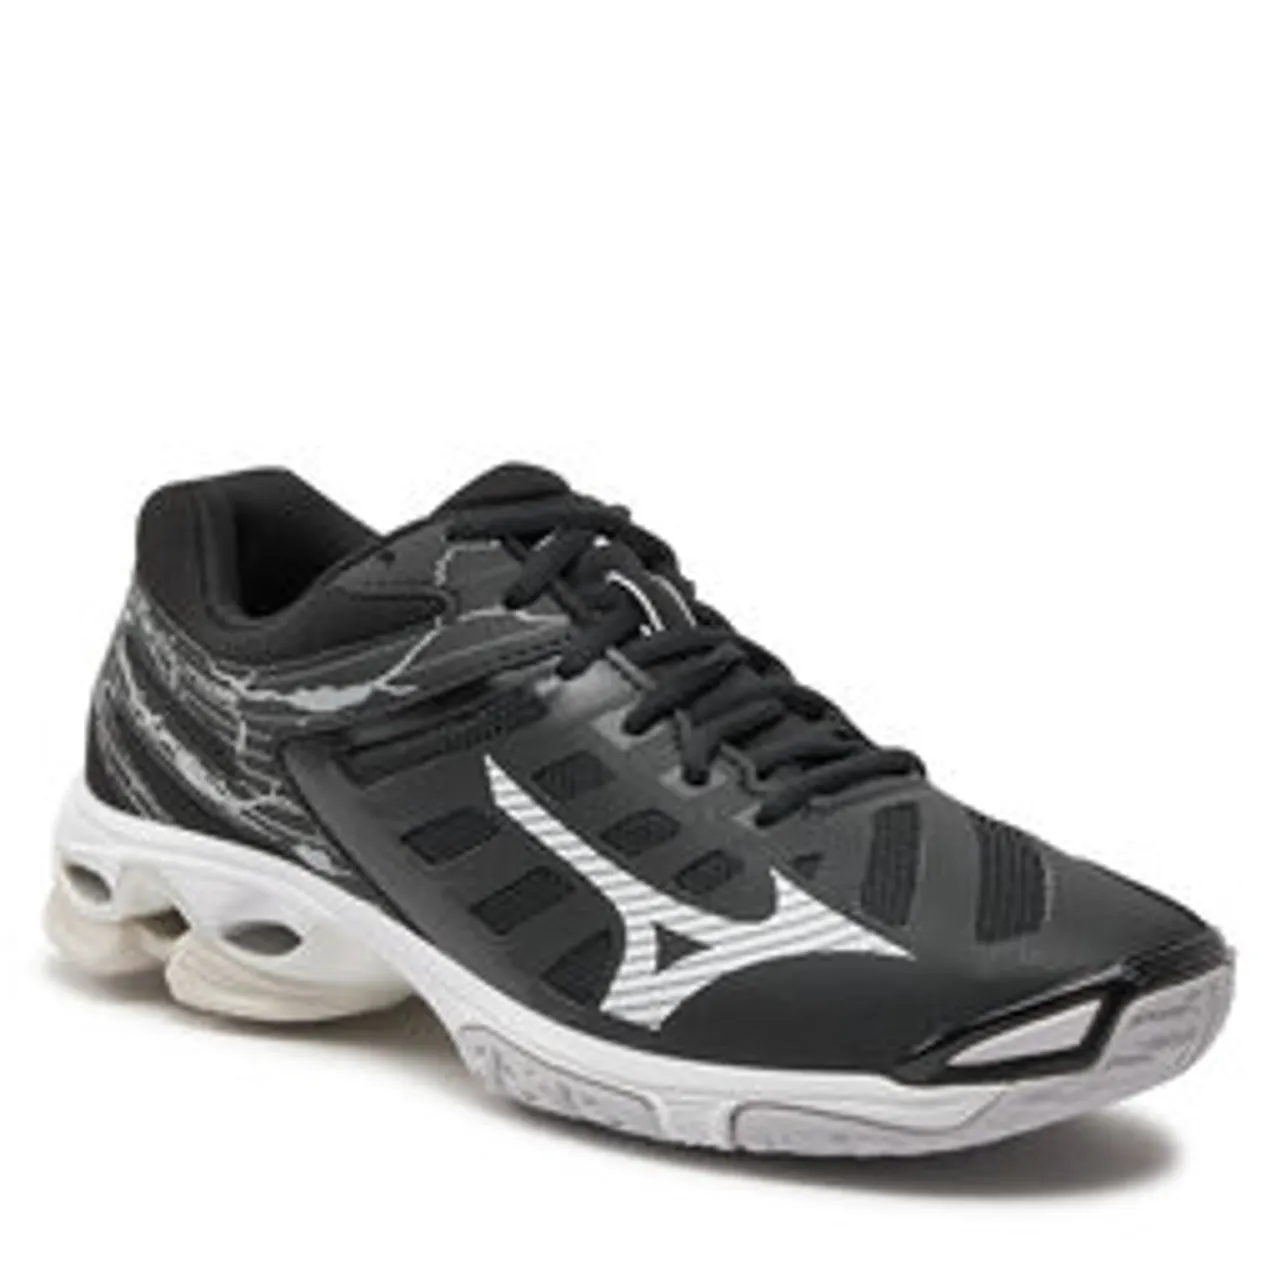 Schuhe Mizuno Wave Voltage V1GA2160 Black/Silver 52